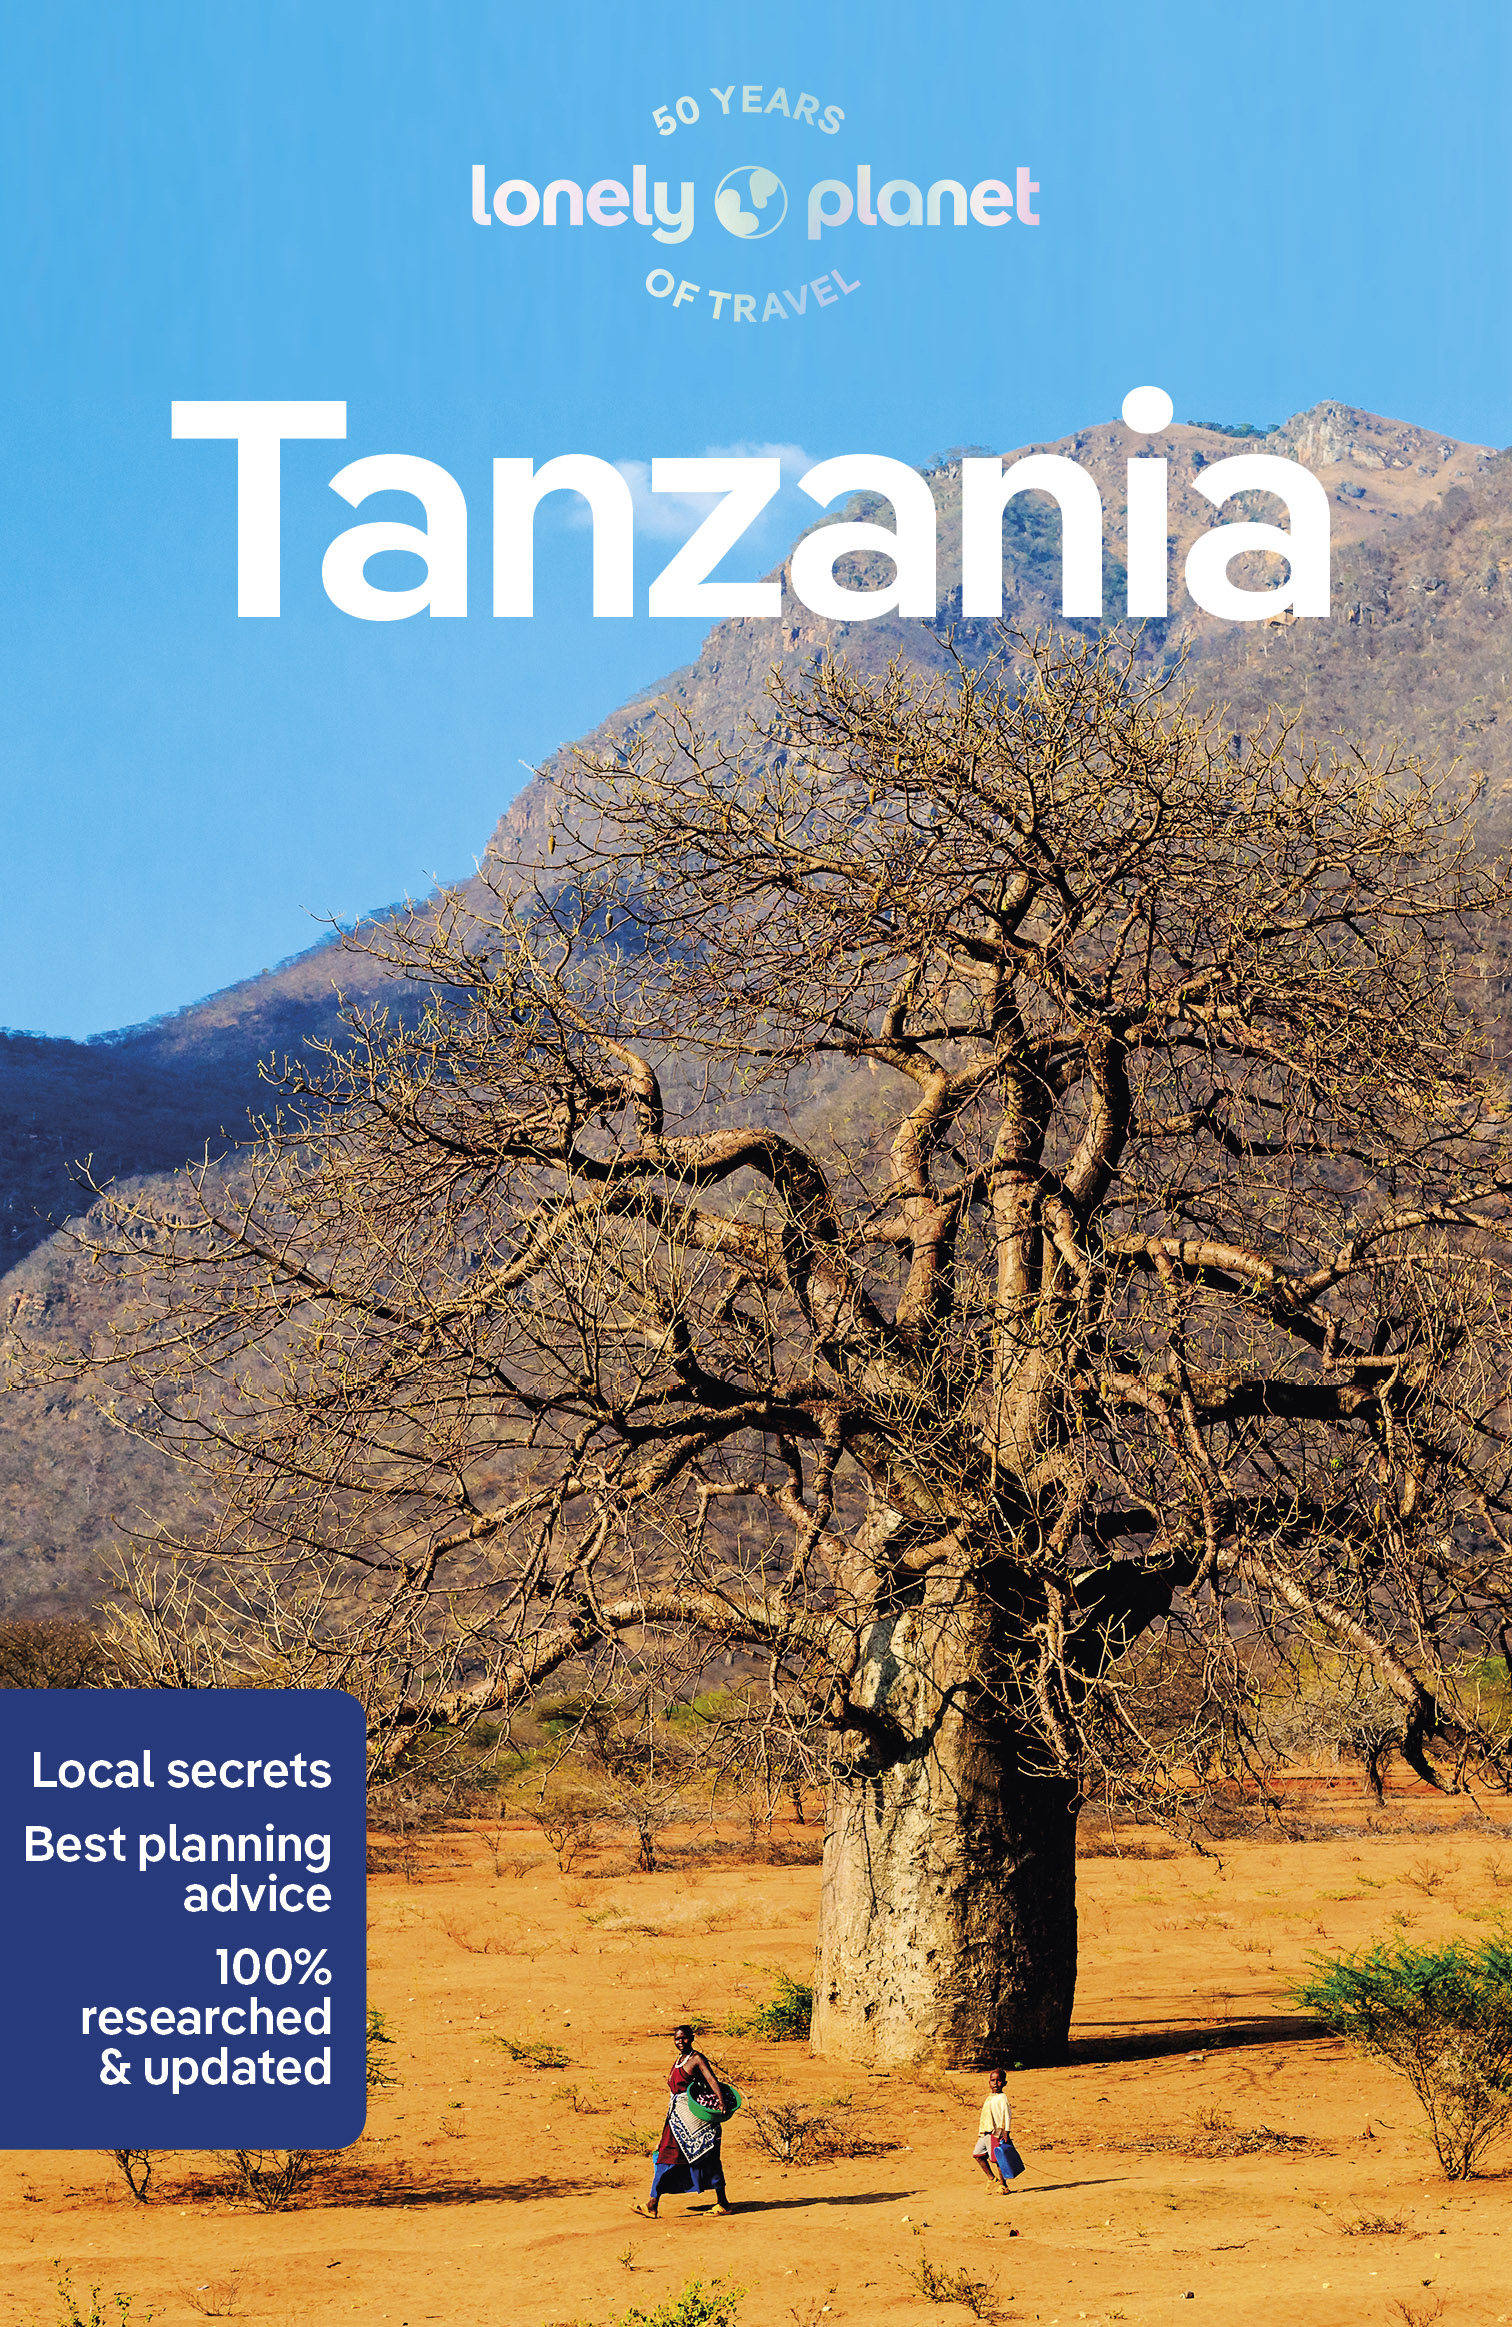 průvodce Tanzania 8.edice anglicky Lonely Planet